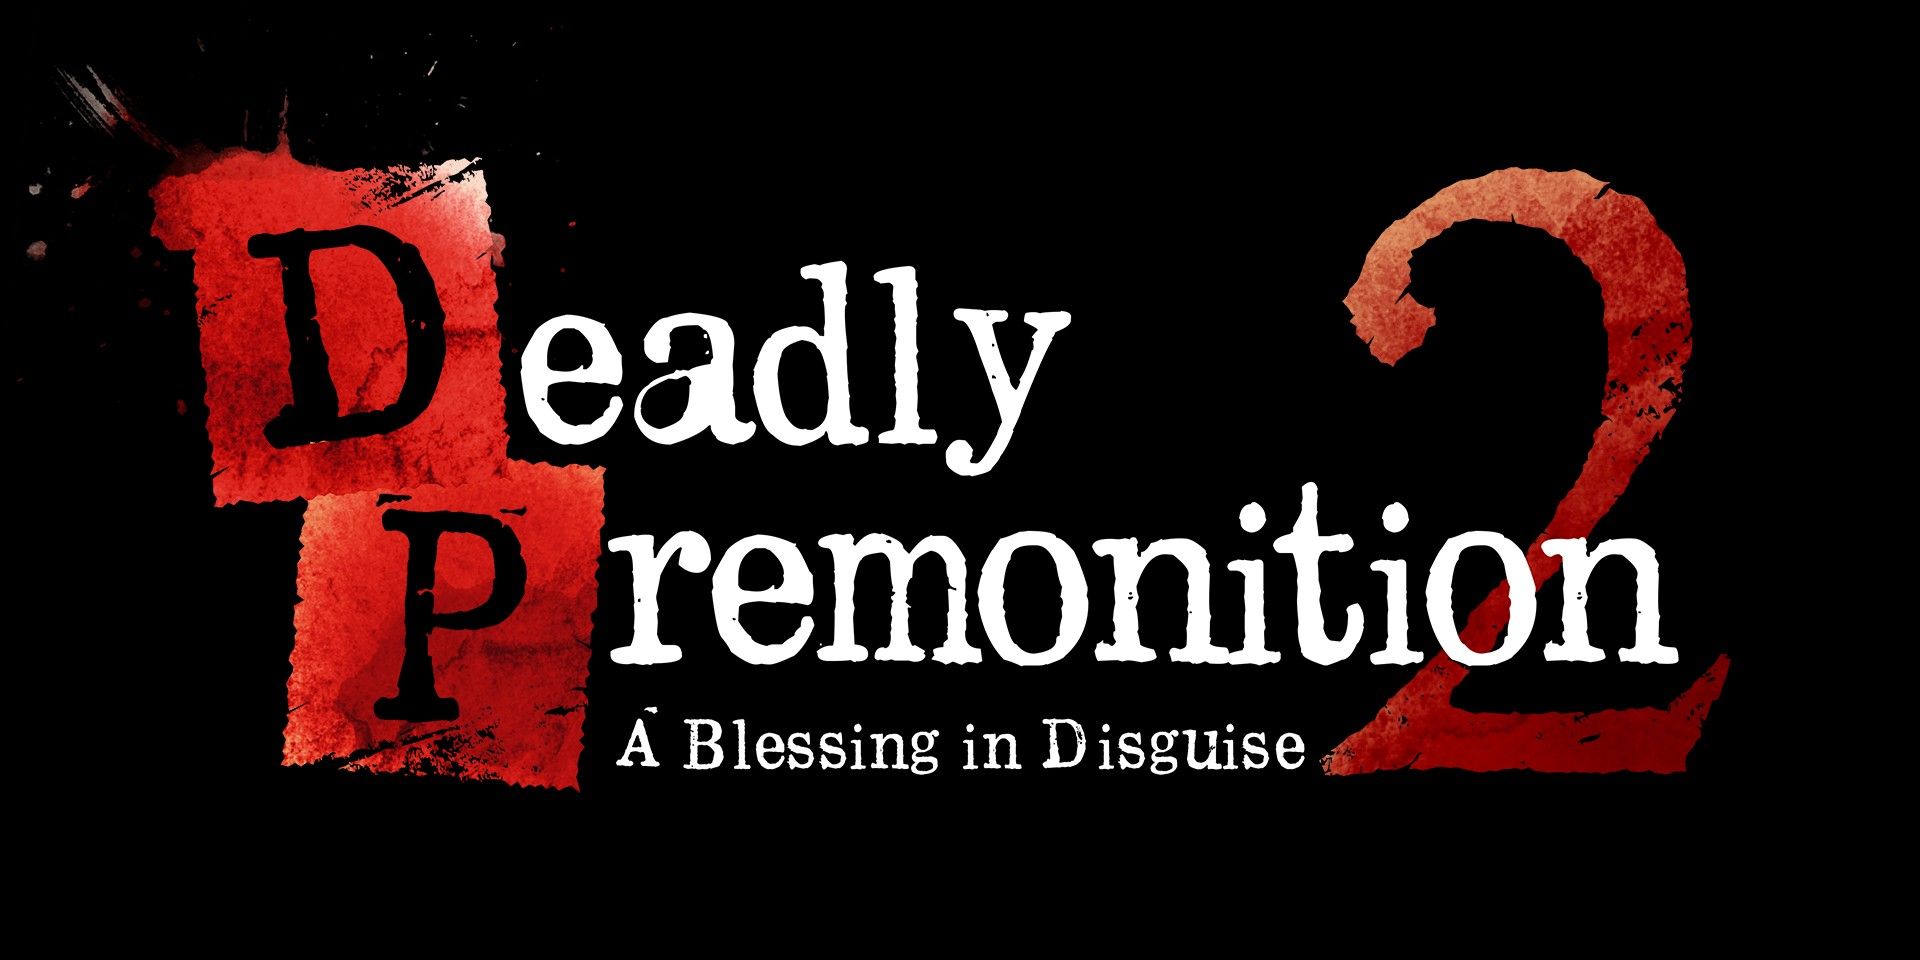 deadly premonition 2 promo image